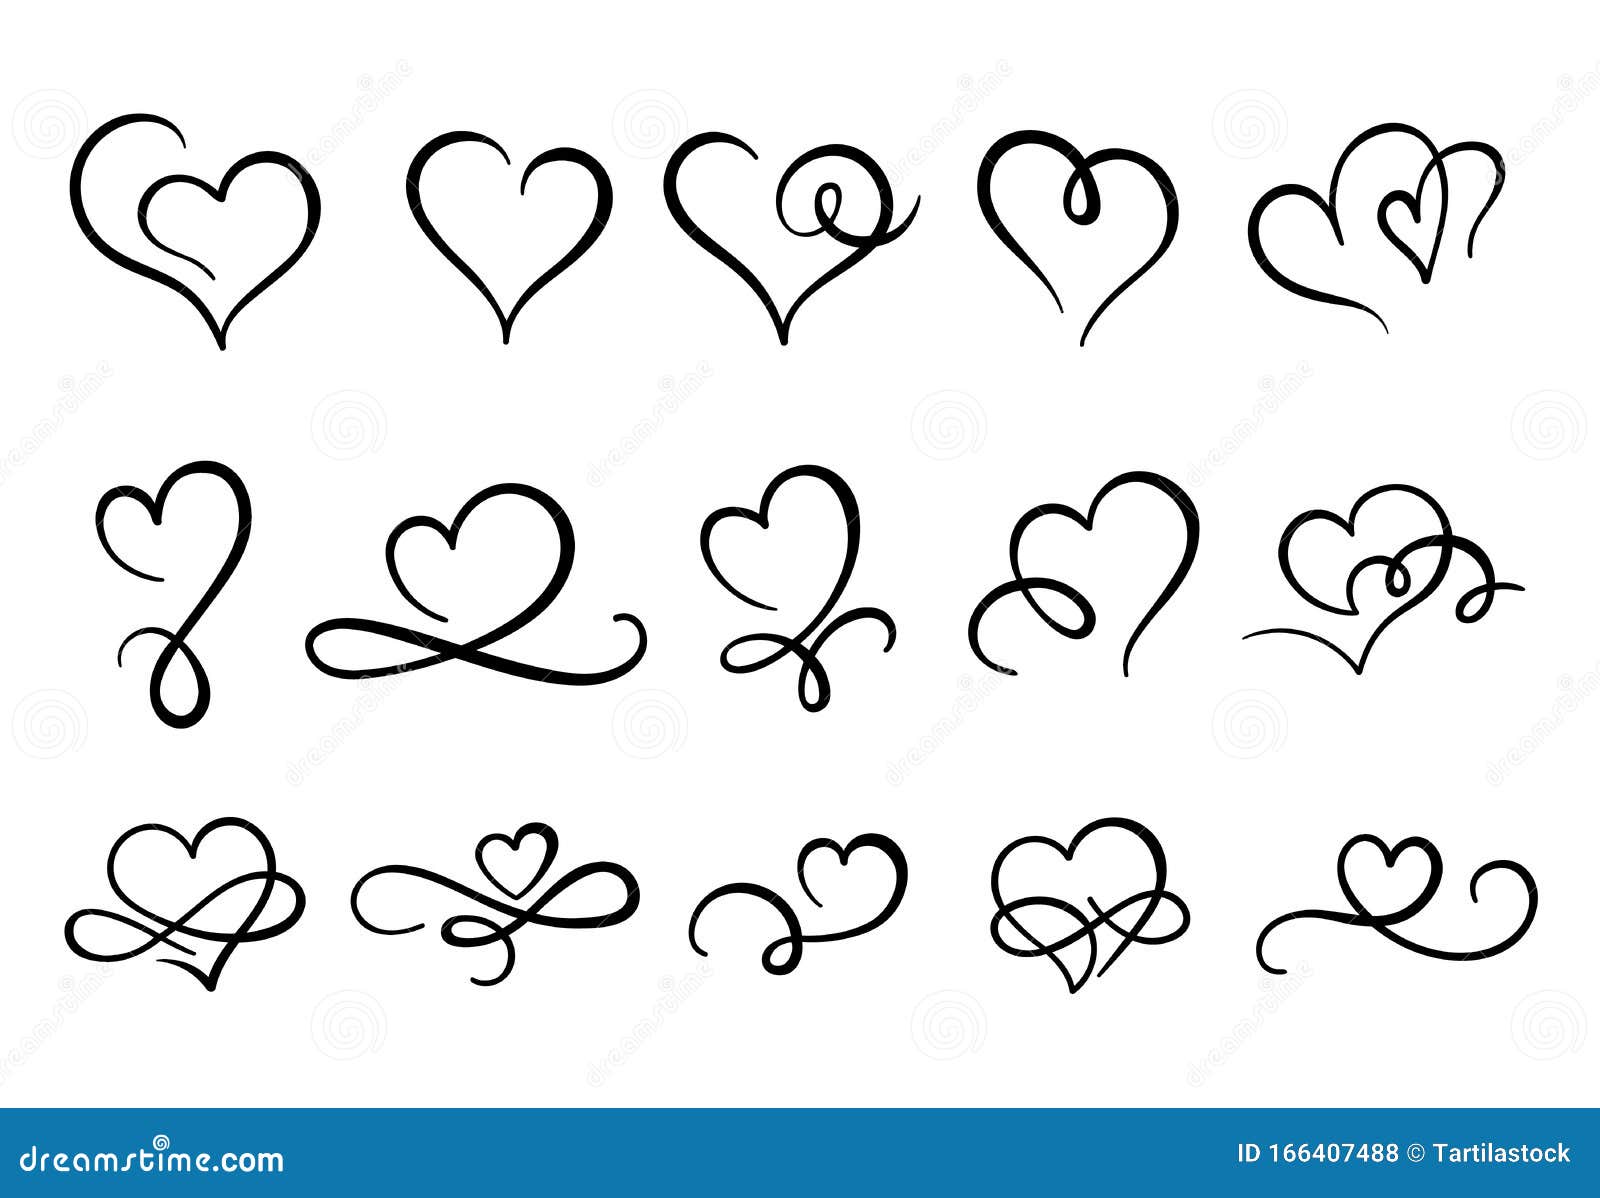 love hearts flourish. heart  flourishes, ornate hand drawn romantic hearts and valentines day   set